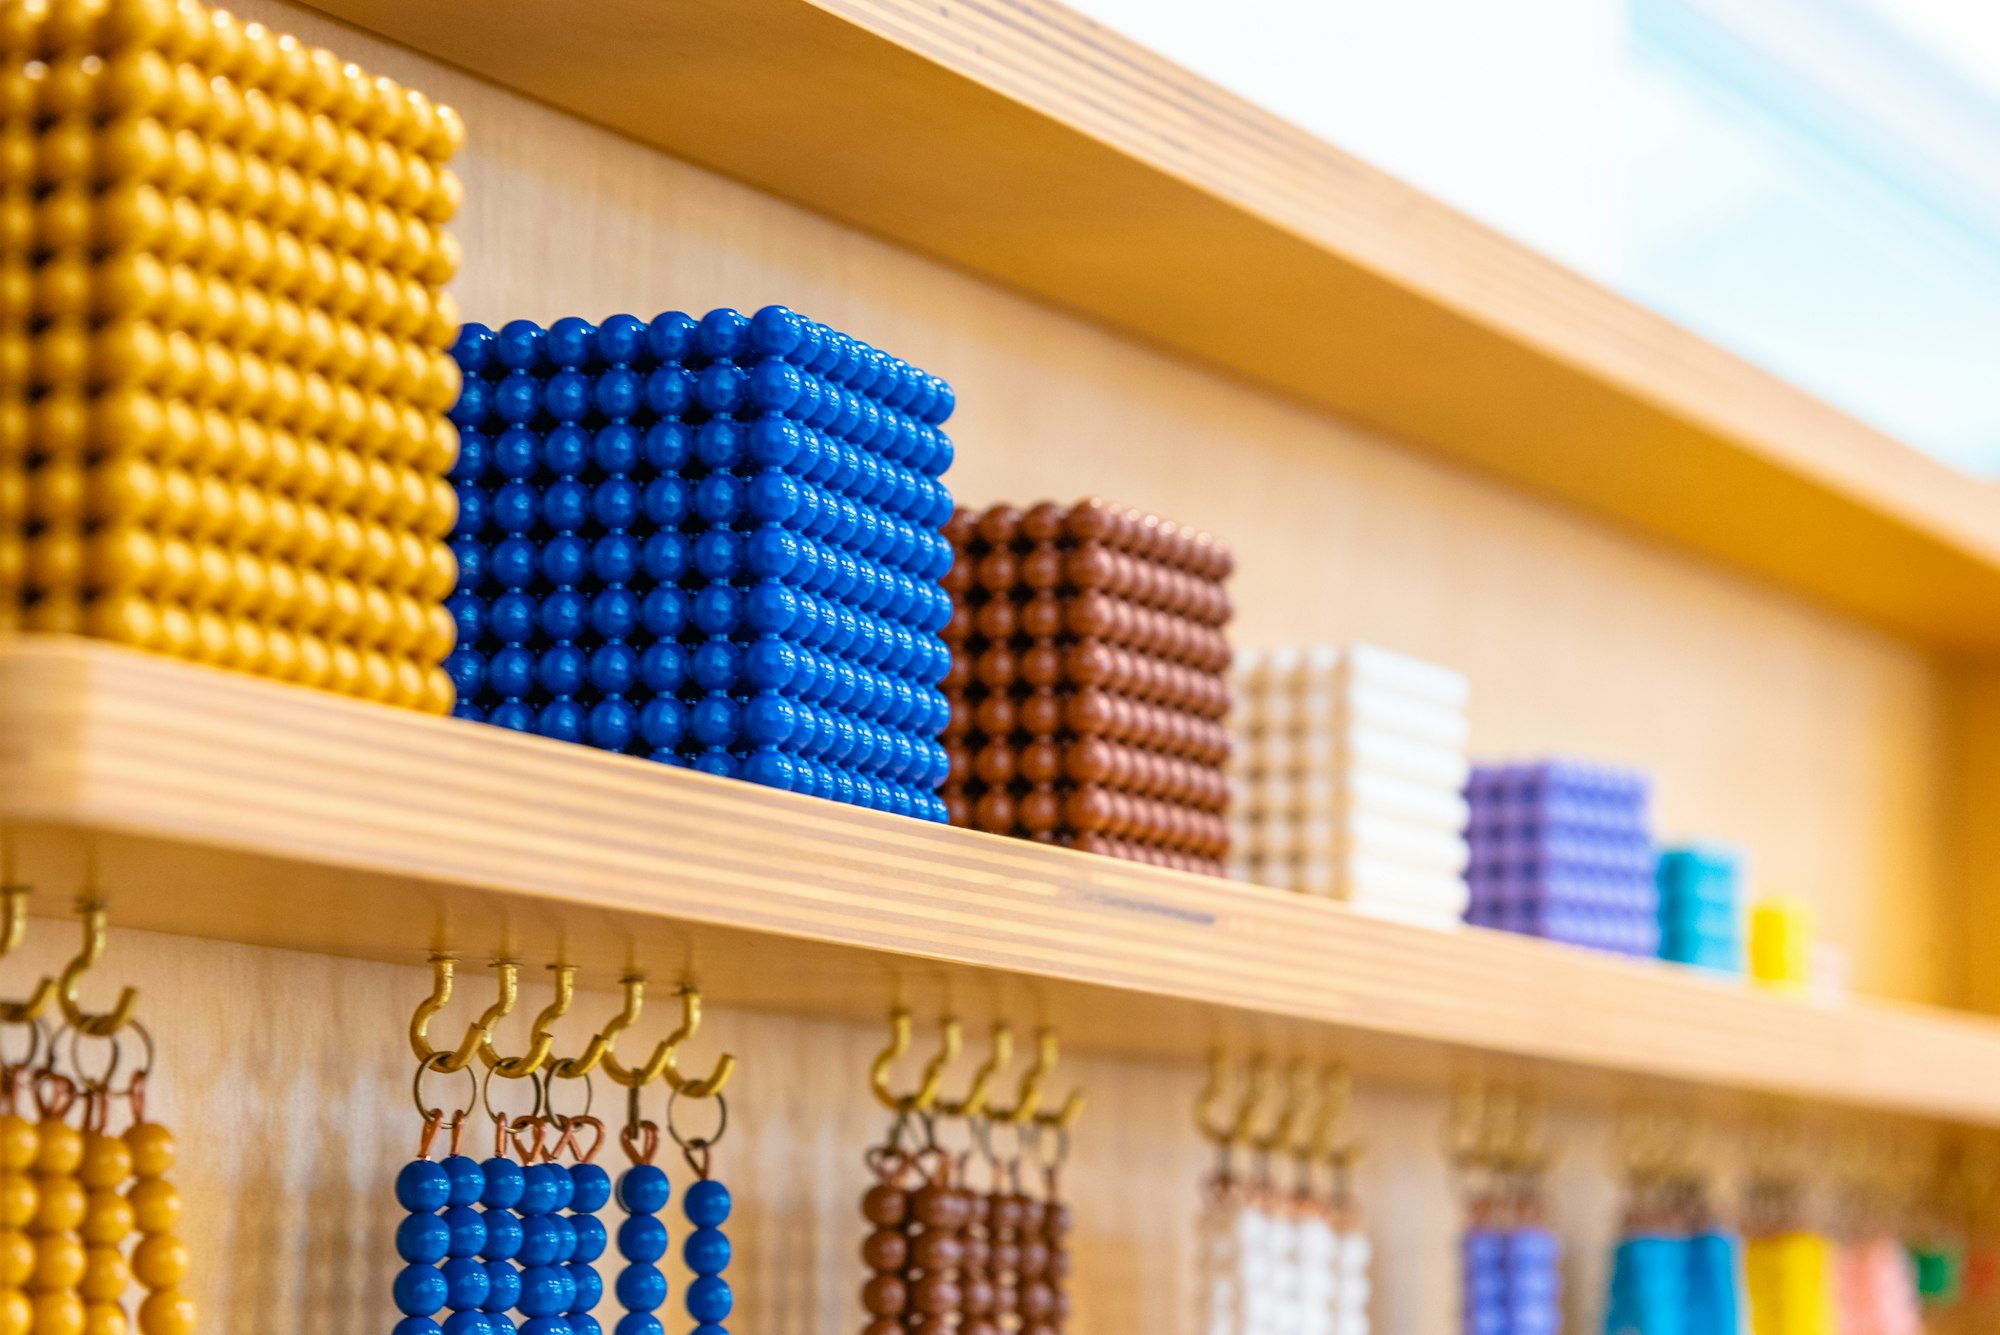 Montessori bead chain lesson for math in Elementary school classroom